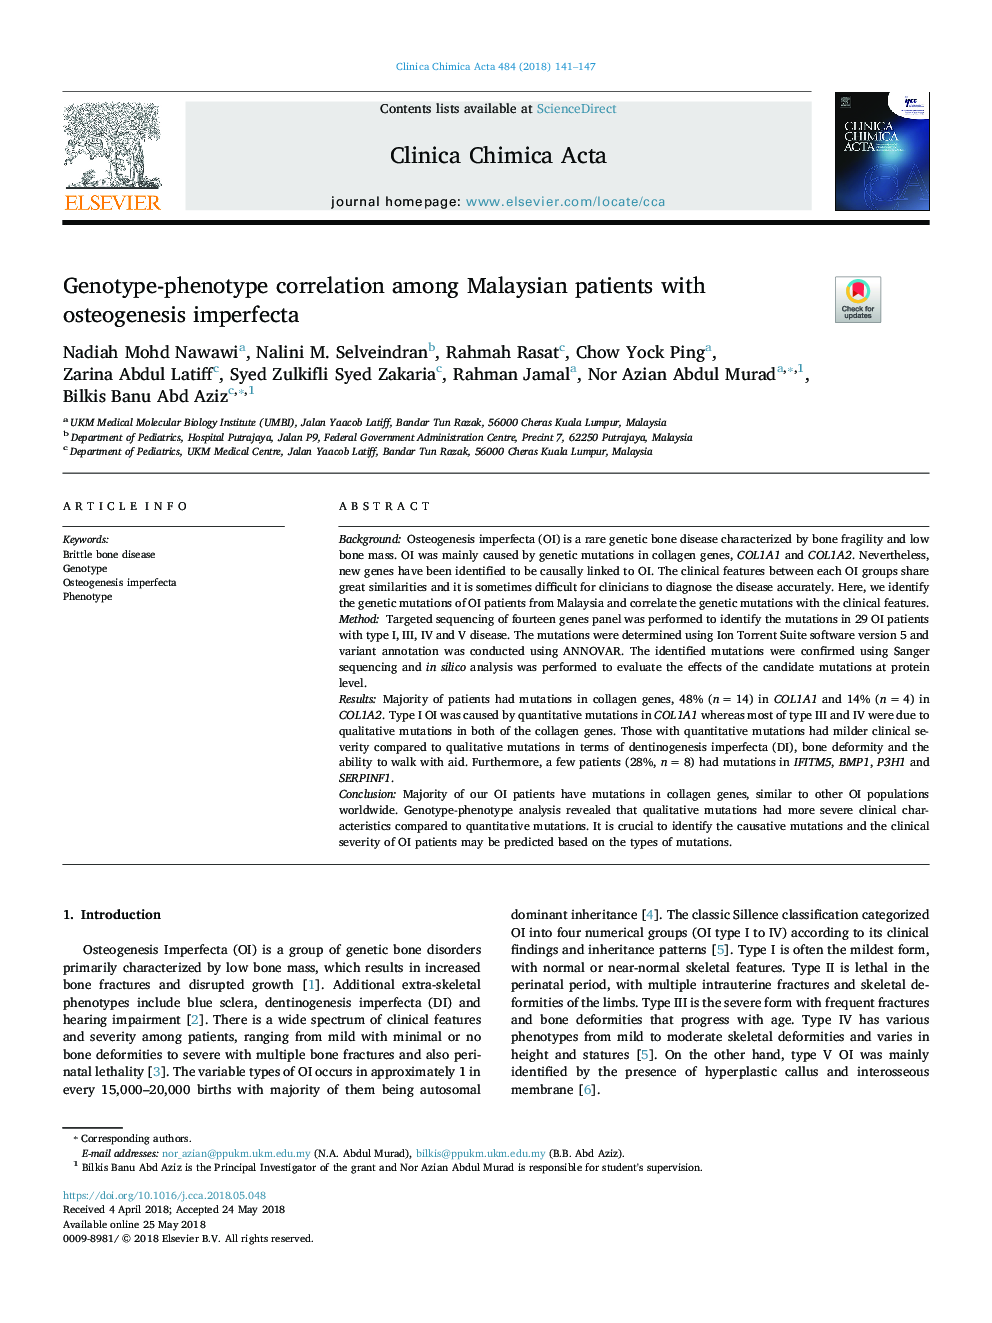 Genotype-phenotype correlation among Malaysian patients with osteogenesis imperfecta